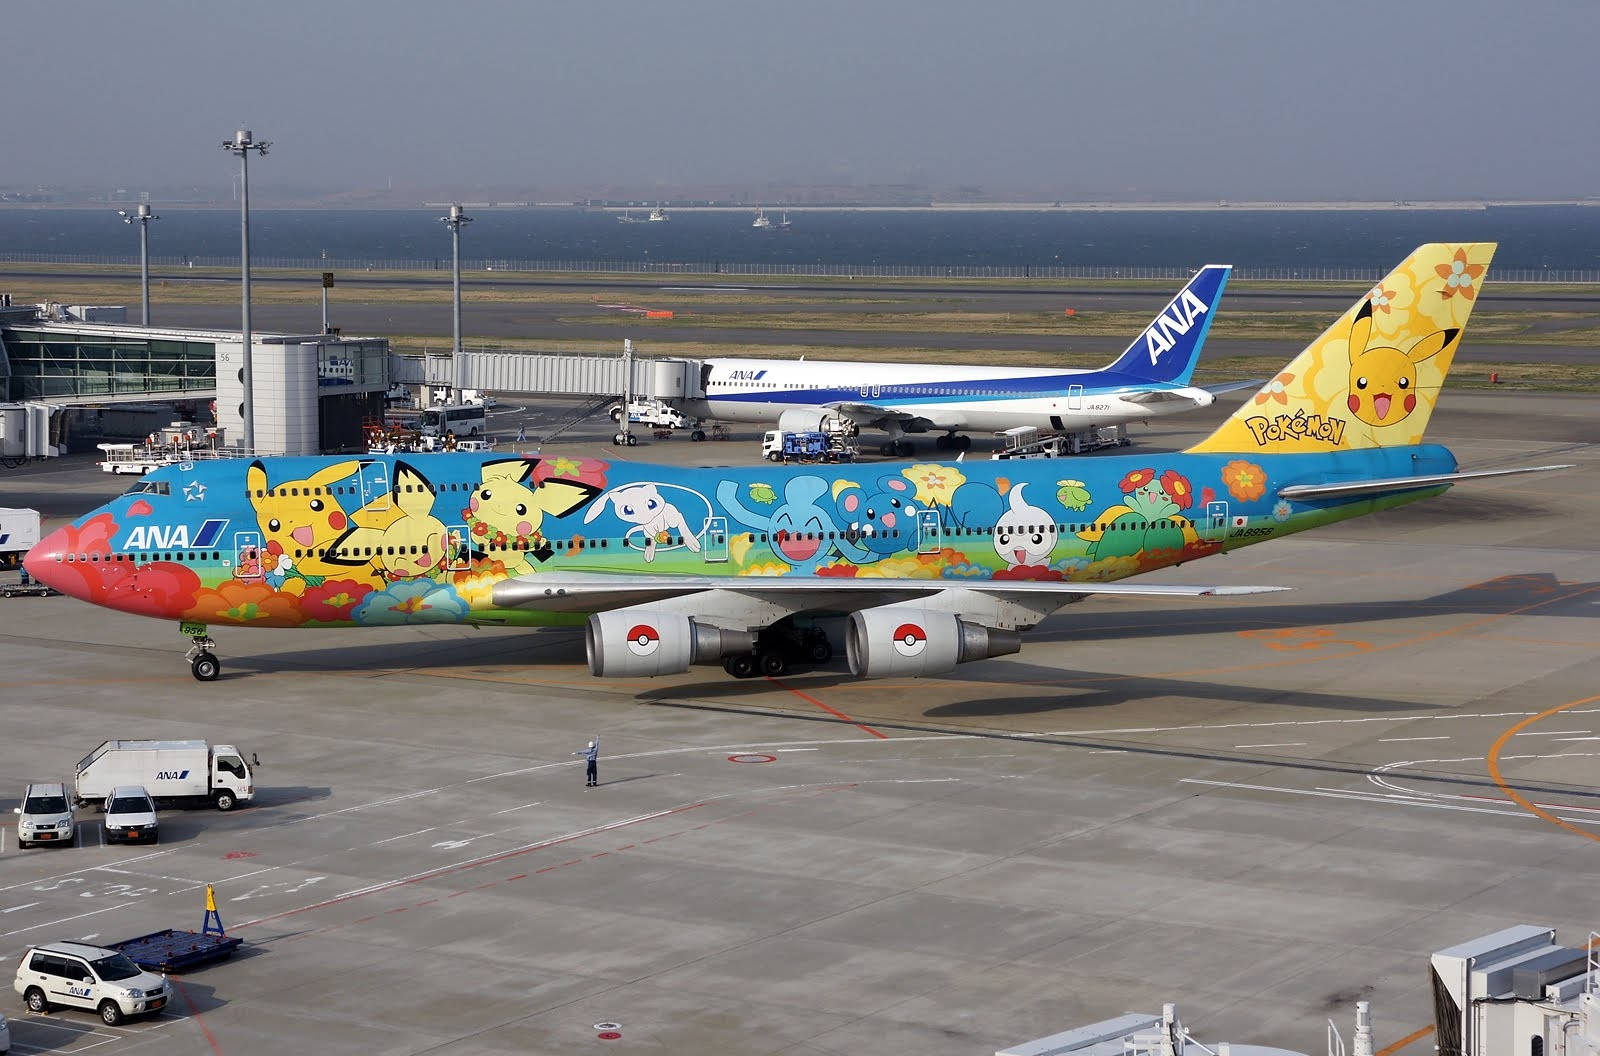 Pokemon-Themed ANA Airplane Wallpaper